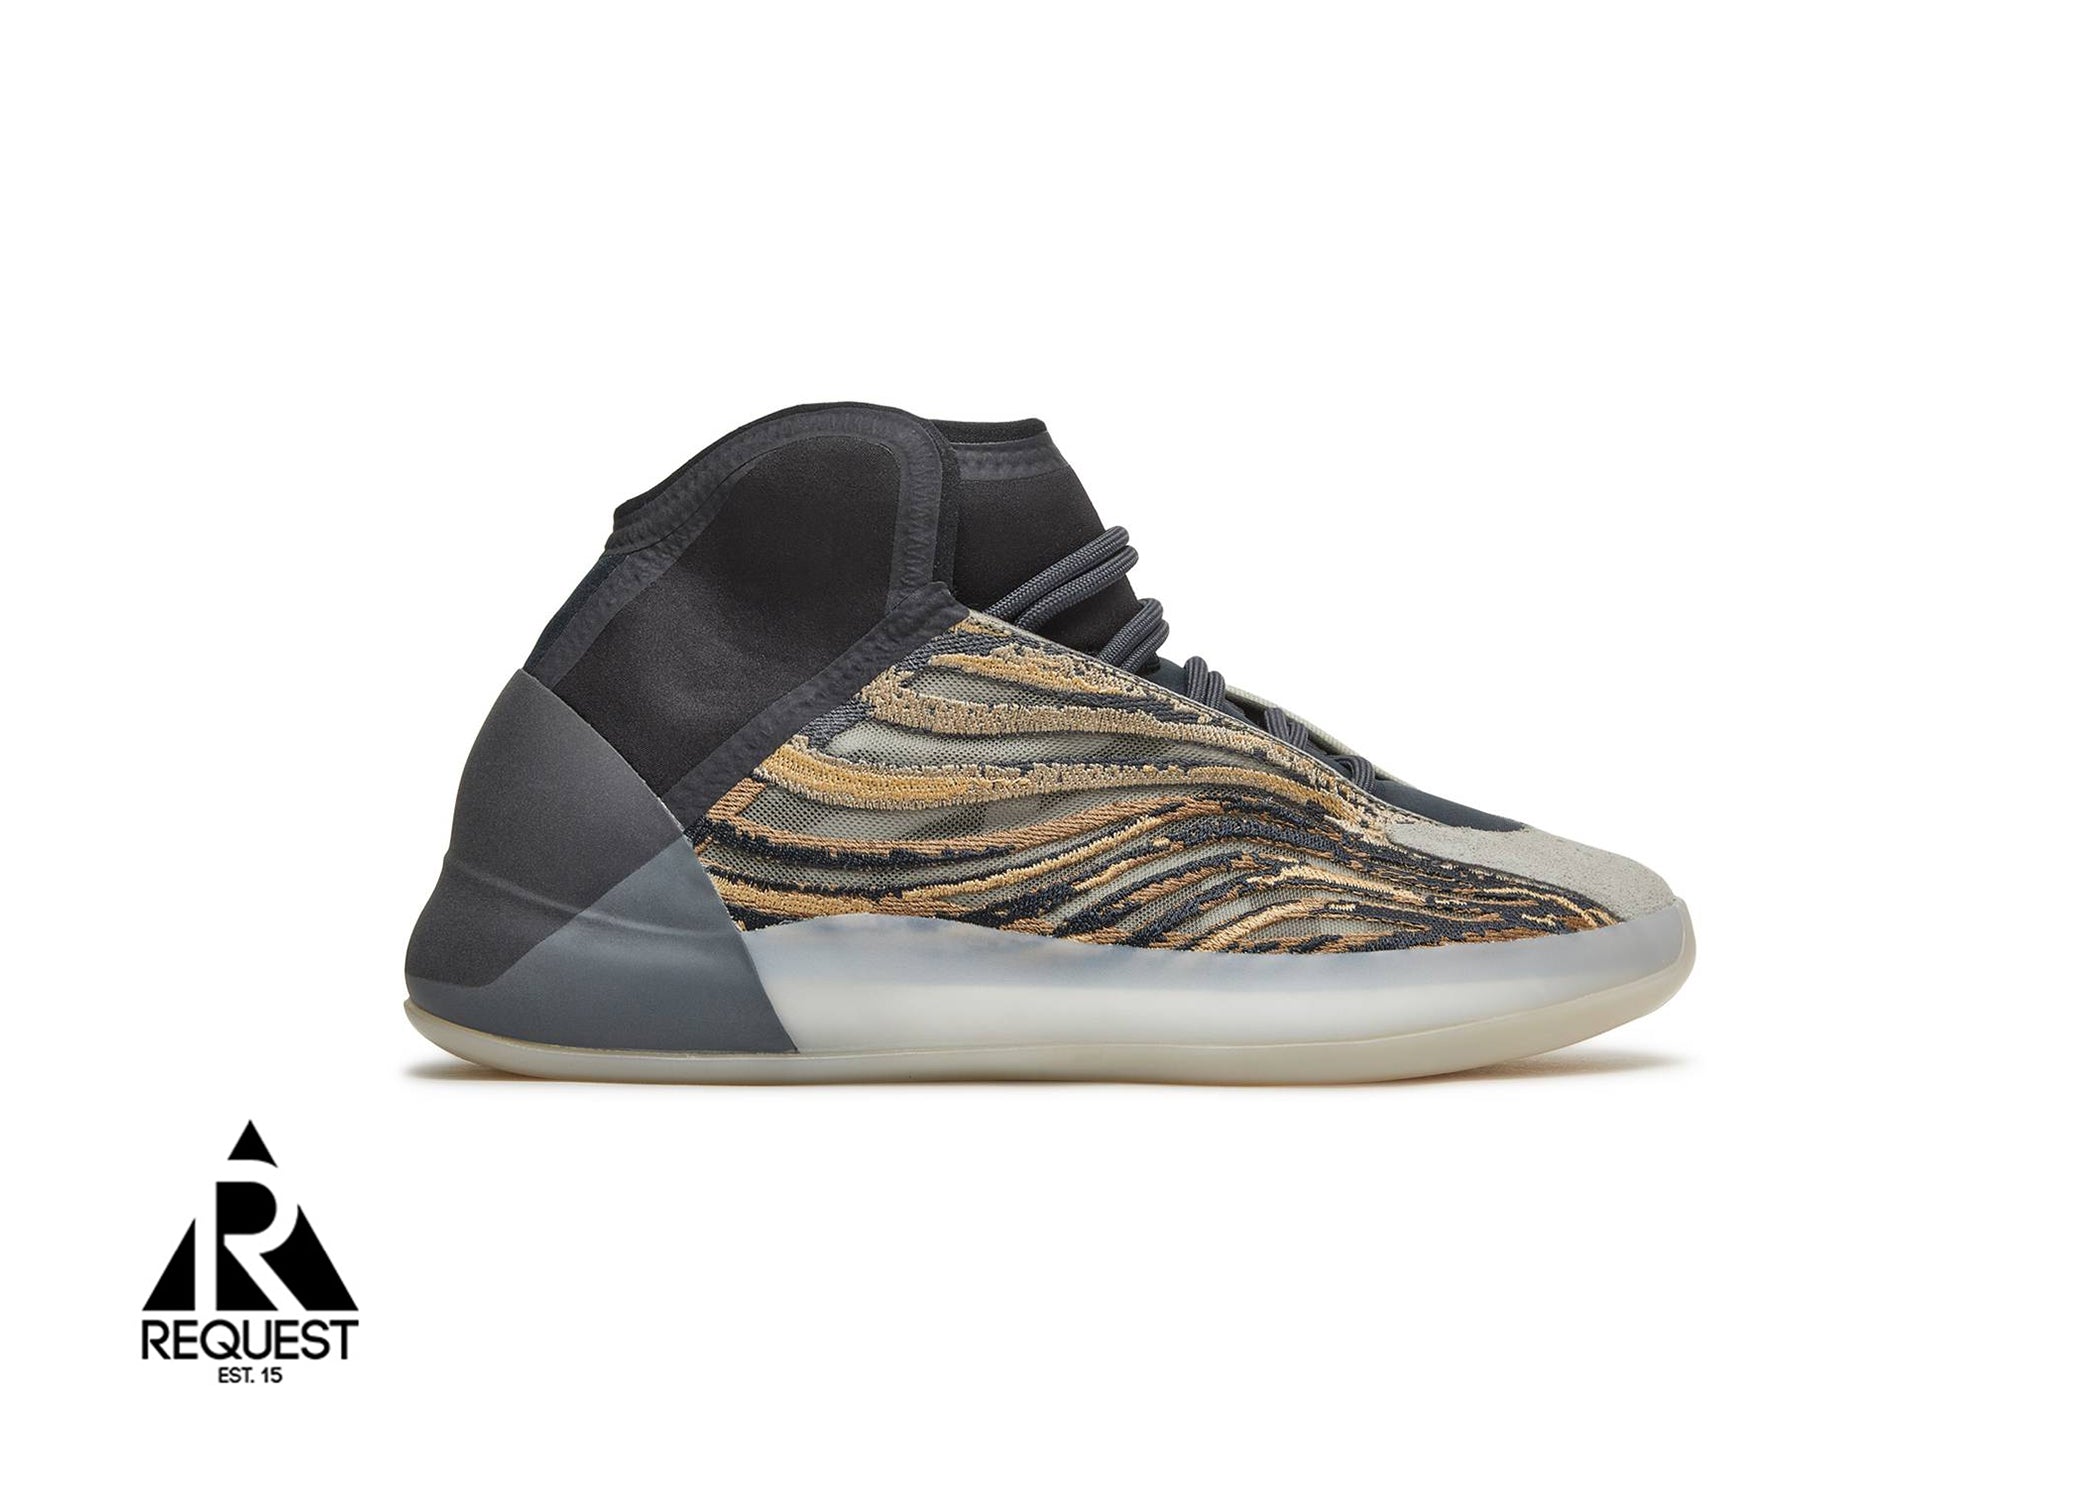 Adidas Yeezy QNTM “Amber Tint”